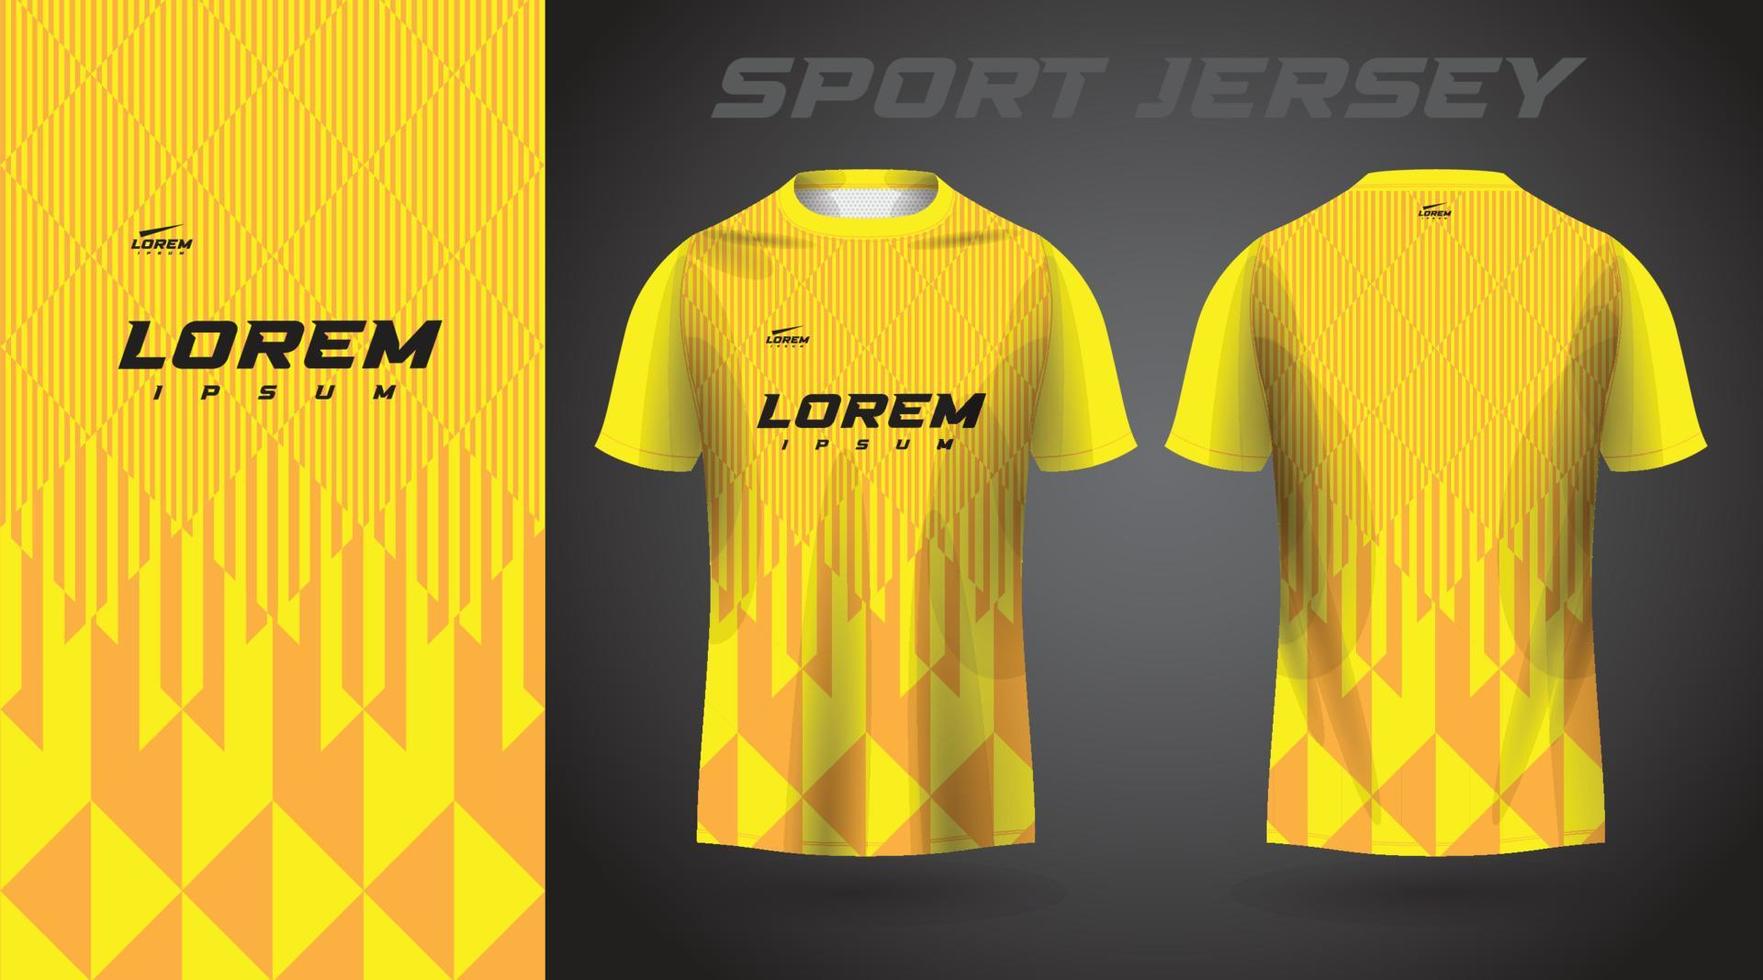 design de camisa esportiva de camiseta amarela vetor